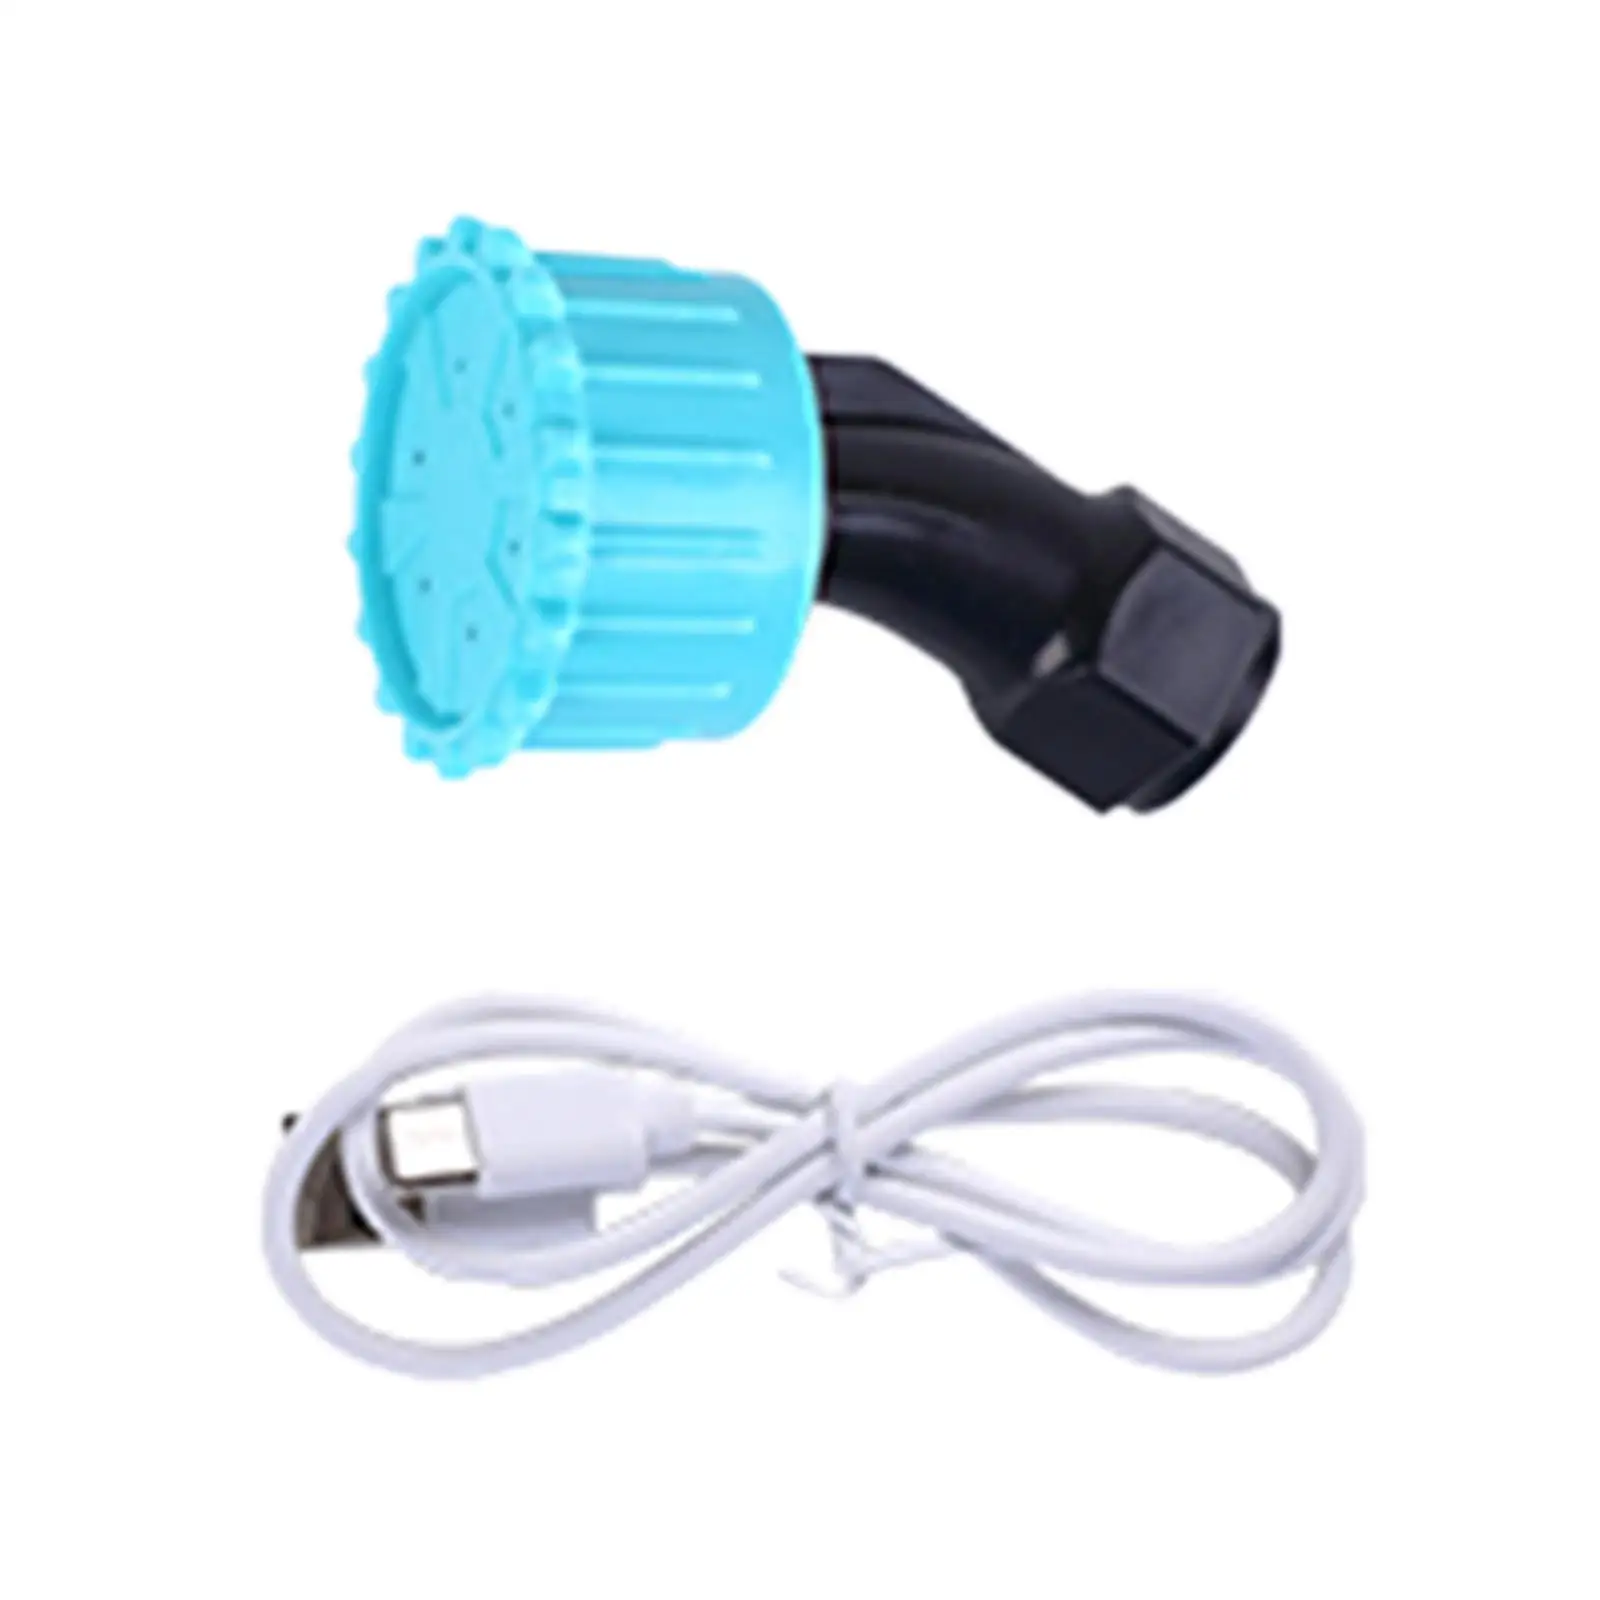 Automatic Garden Sprayer Gun Garden Water Jet Spray Bottle Attachment Car Clean Rechargeable Telescopic for Home Cleaning